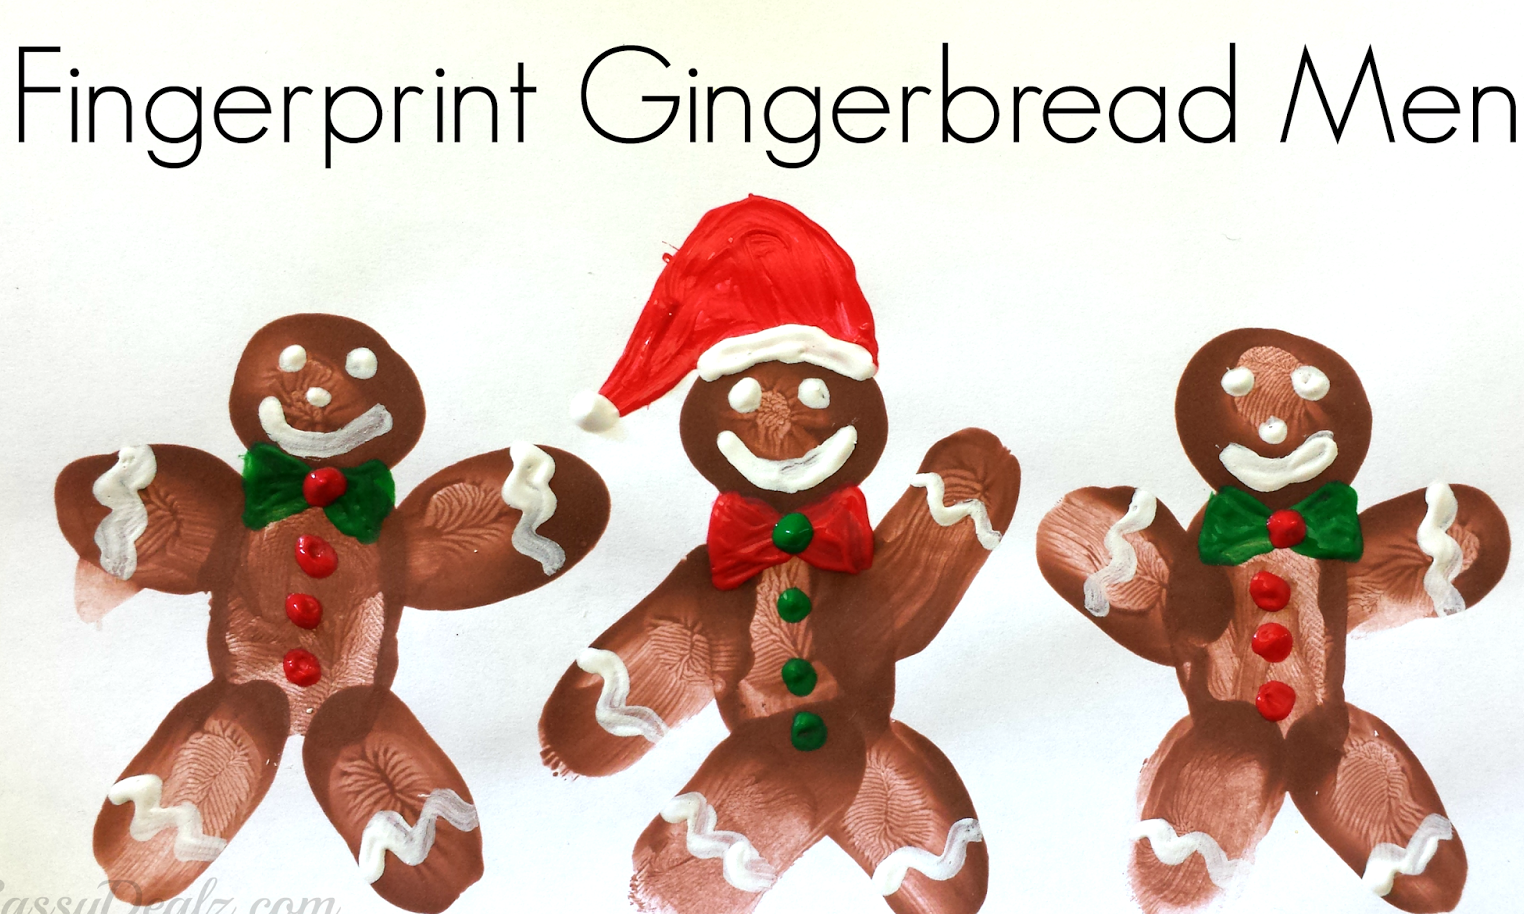 fingerprint gingerbread men